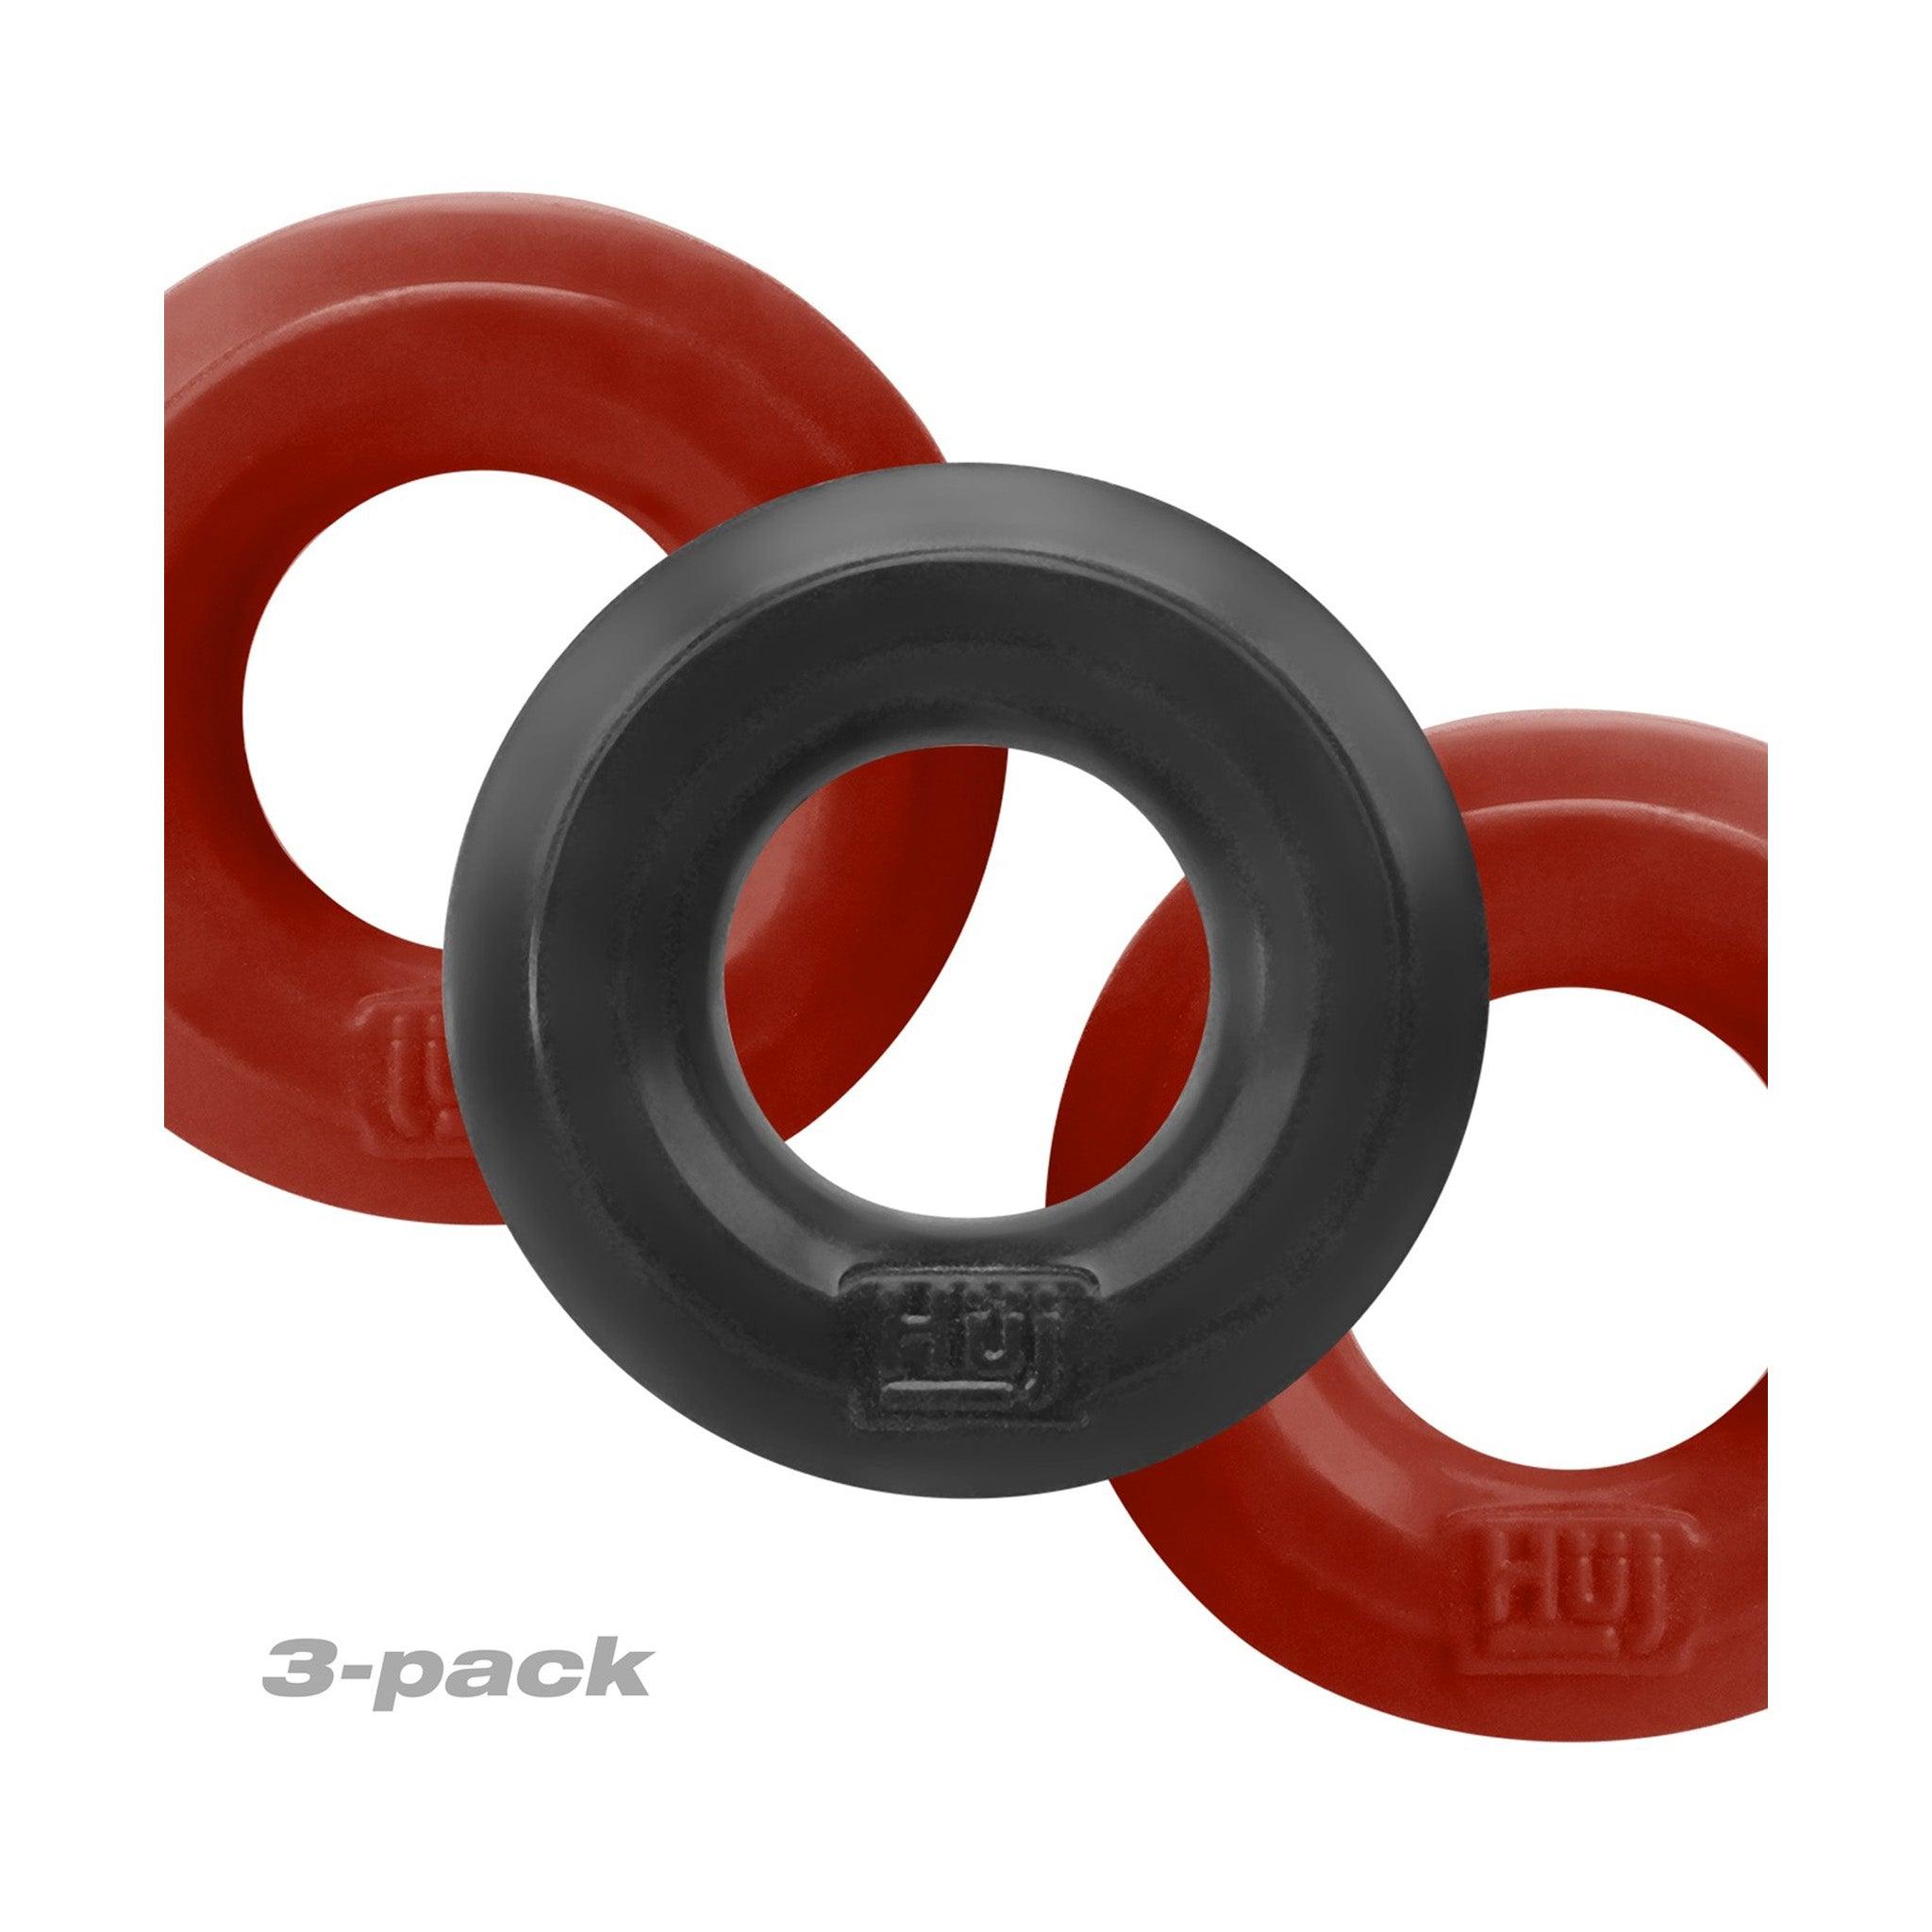 hünkyjunk HUJ3 C-RING 3-pack Red & Black Silicone+TPR - CheapLubes.com